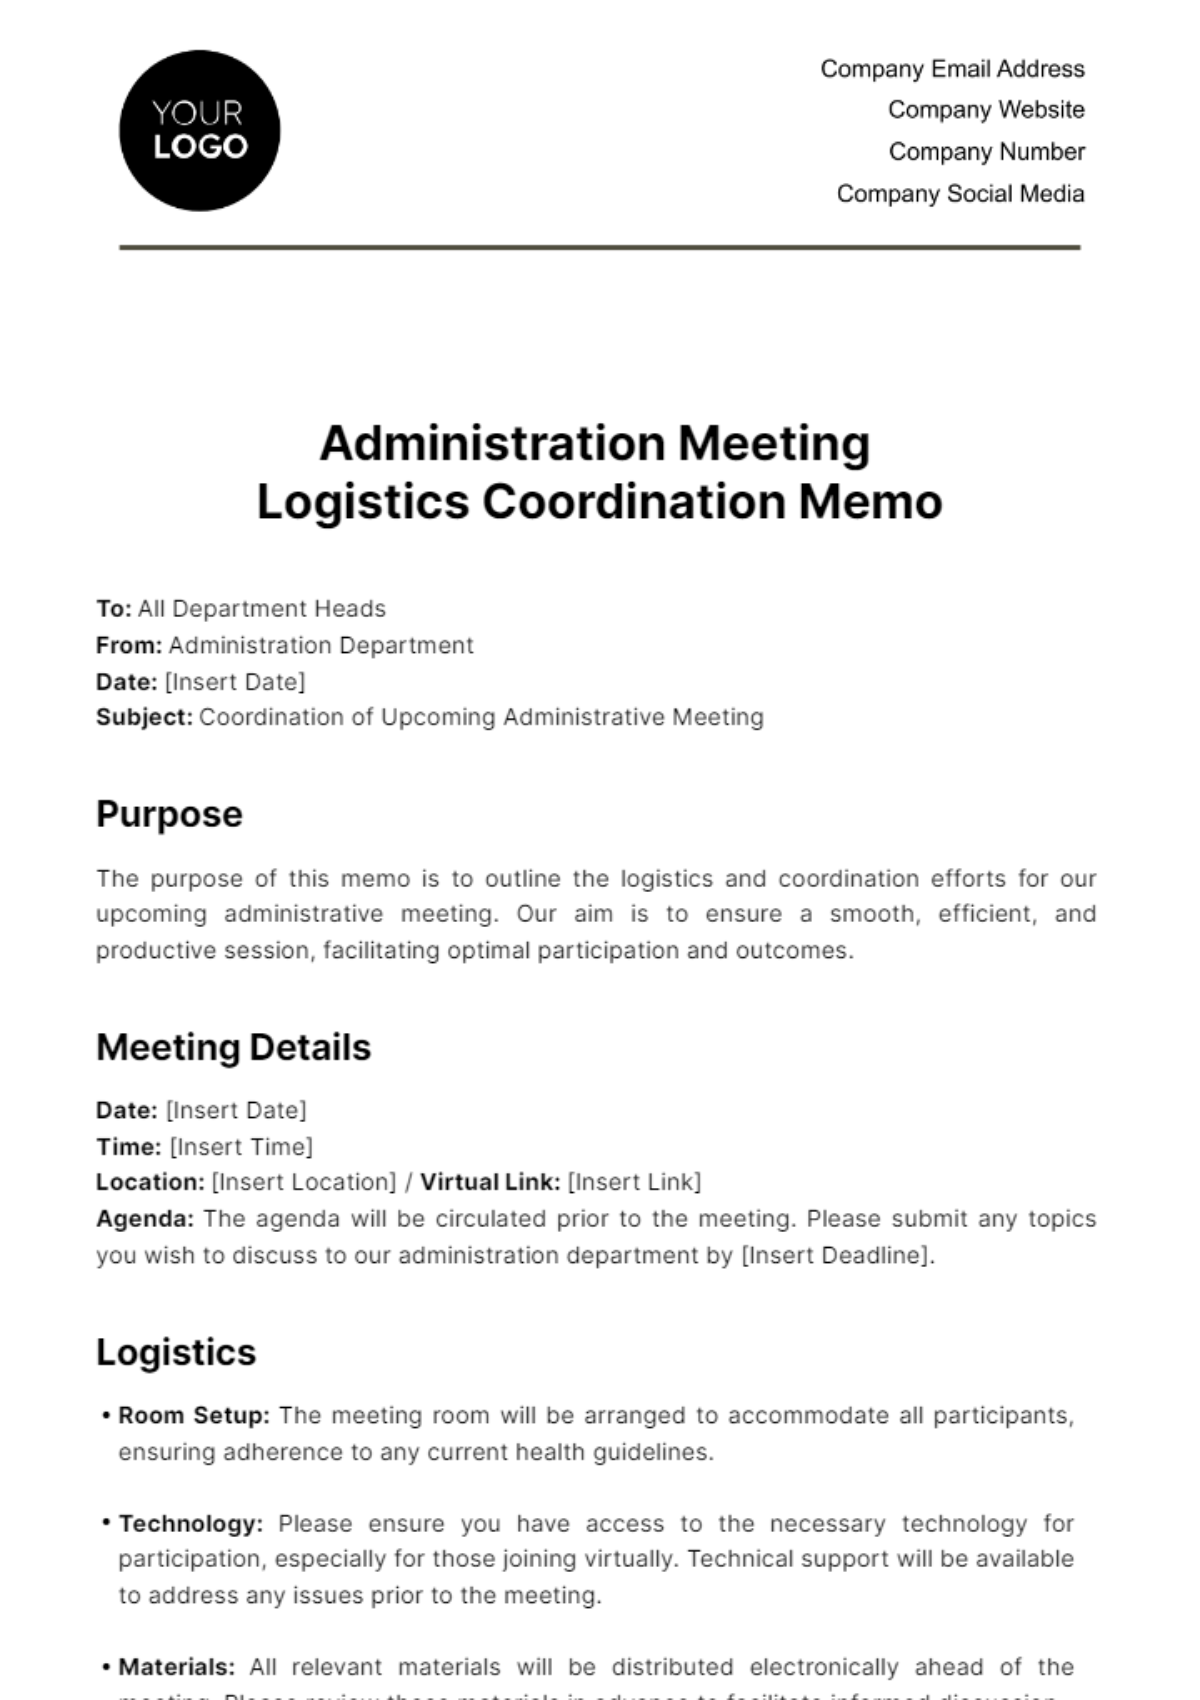 Free Administration Meeting Logistics Coordination Memo Template